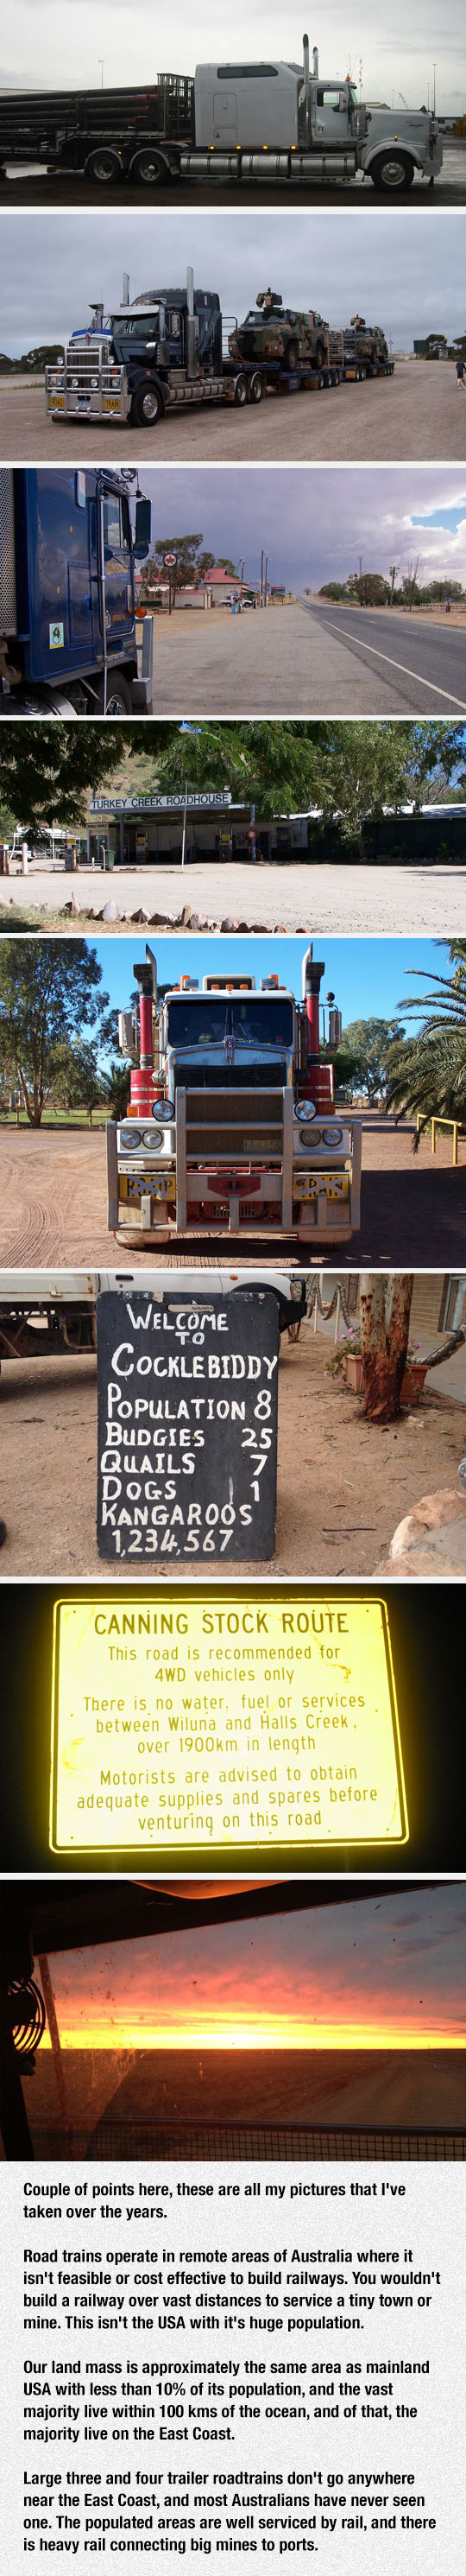 funny-signs-trucks-long-signs-Australia-desert-road - Copy